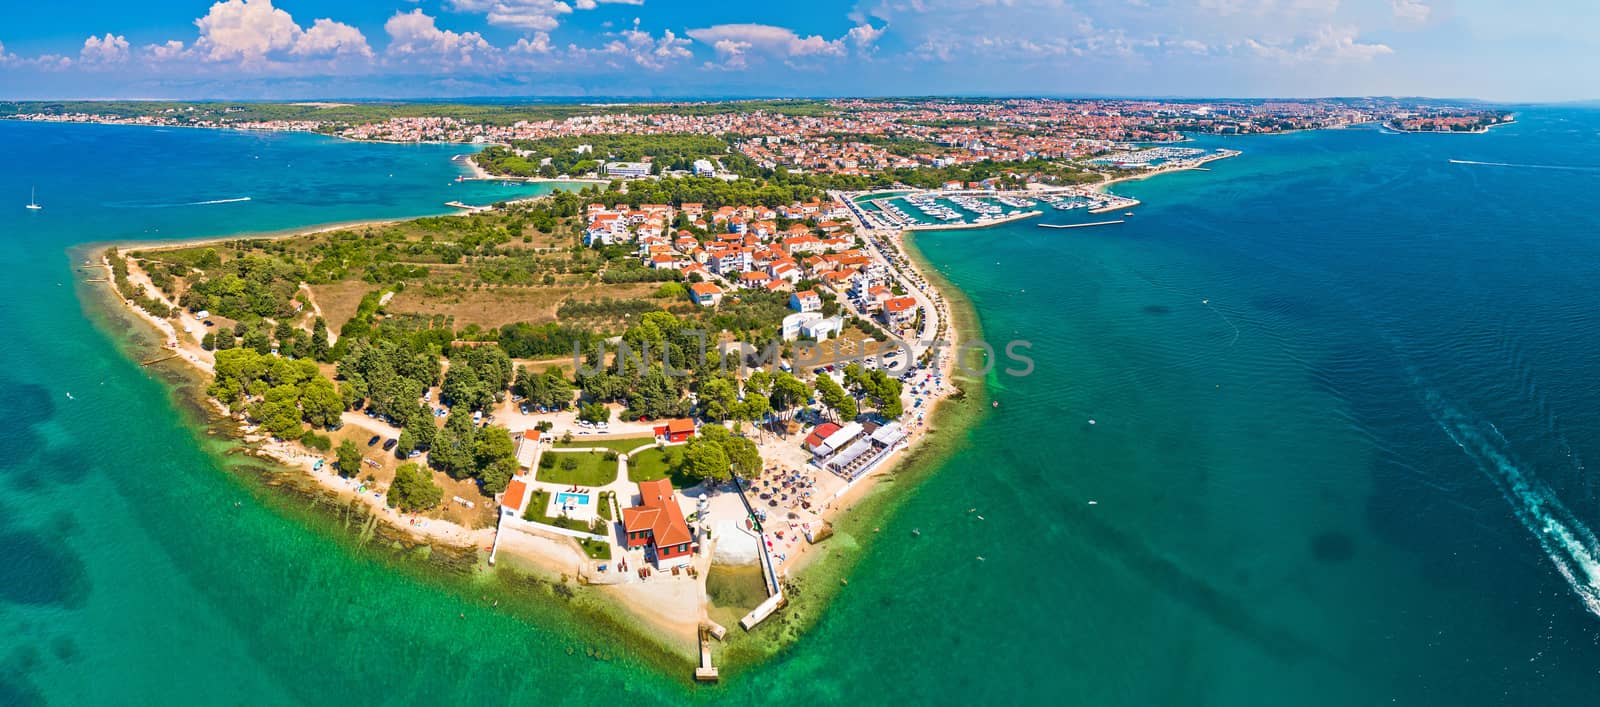 Puntamika peninsula of Zadar aerial panoramic view by xbrchx